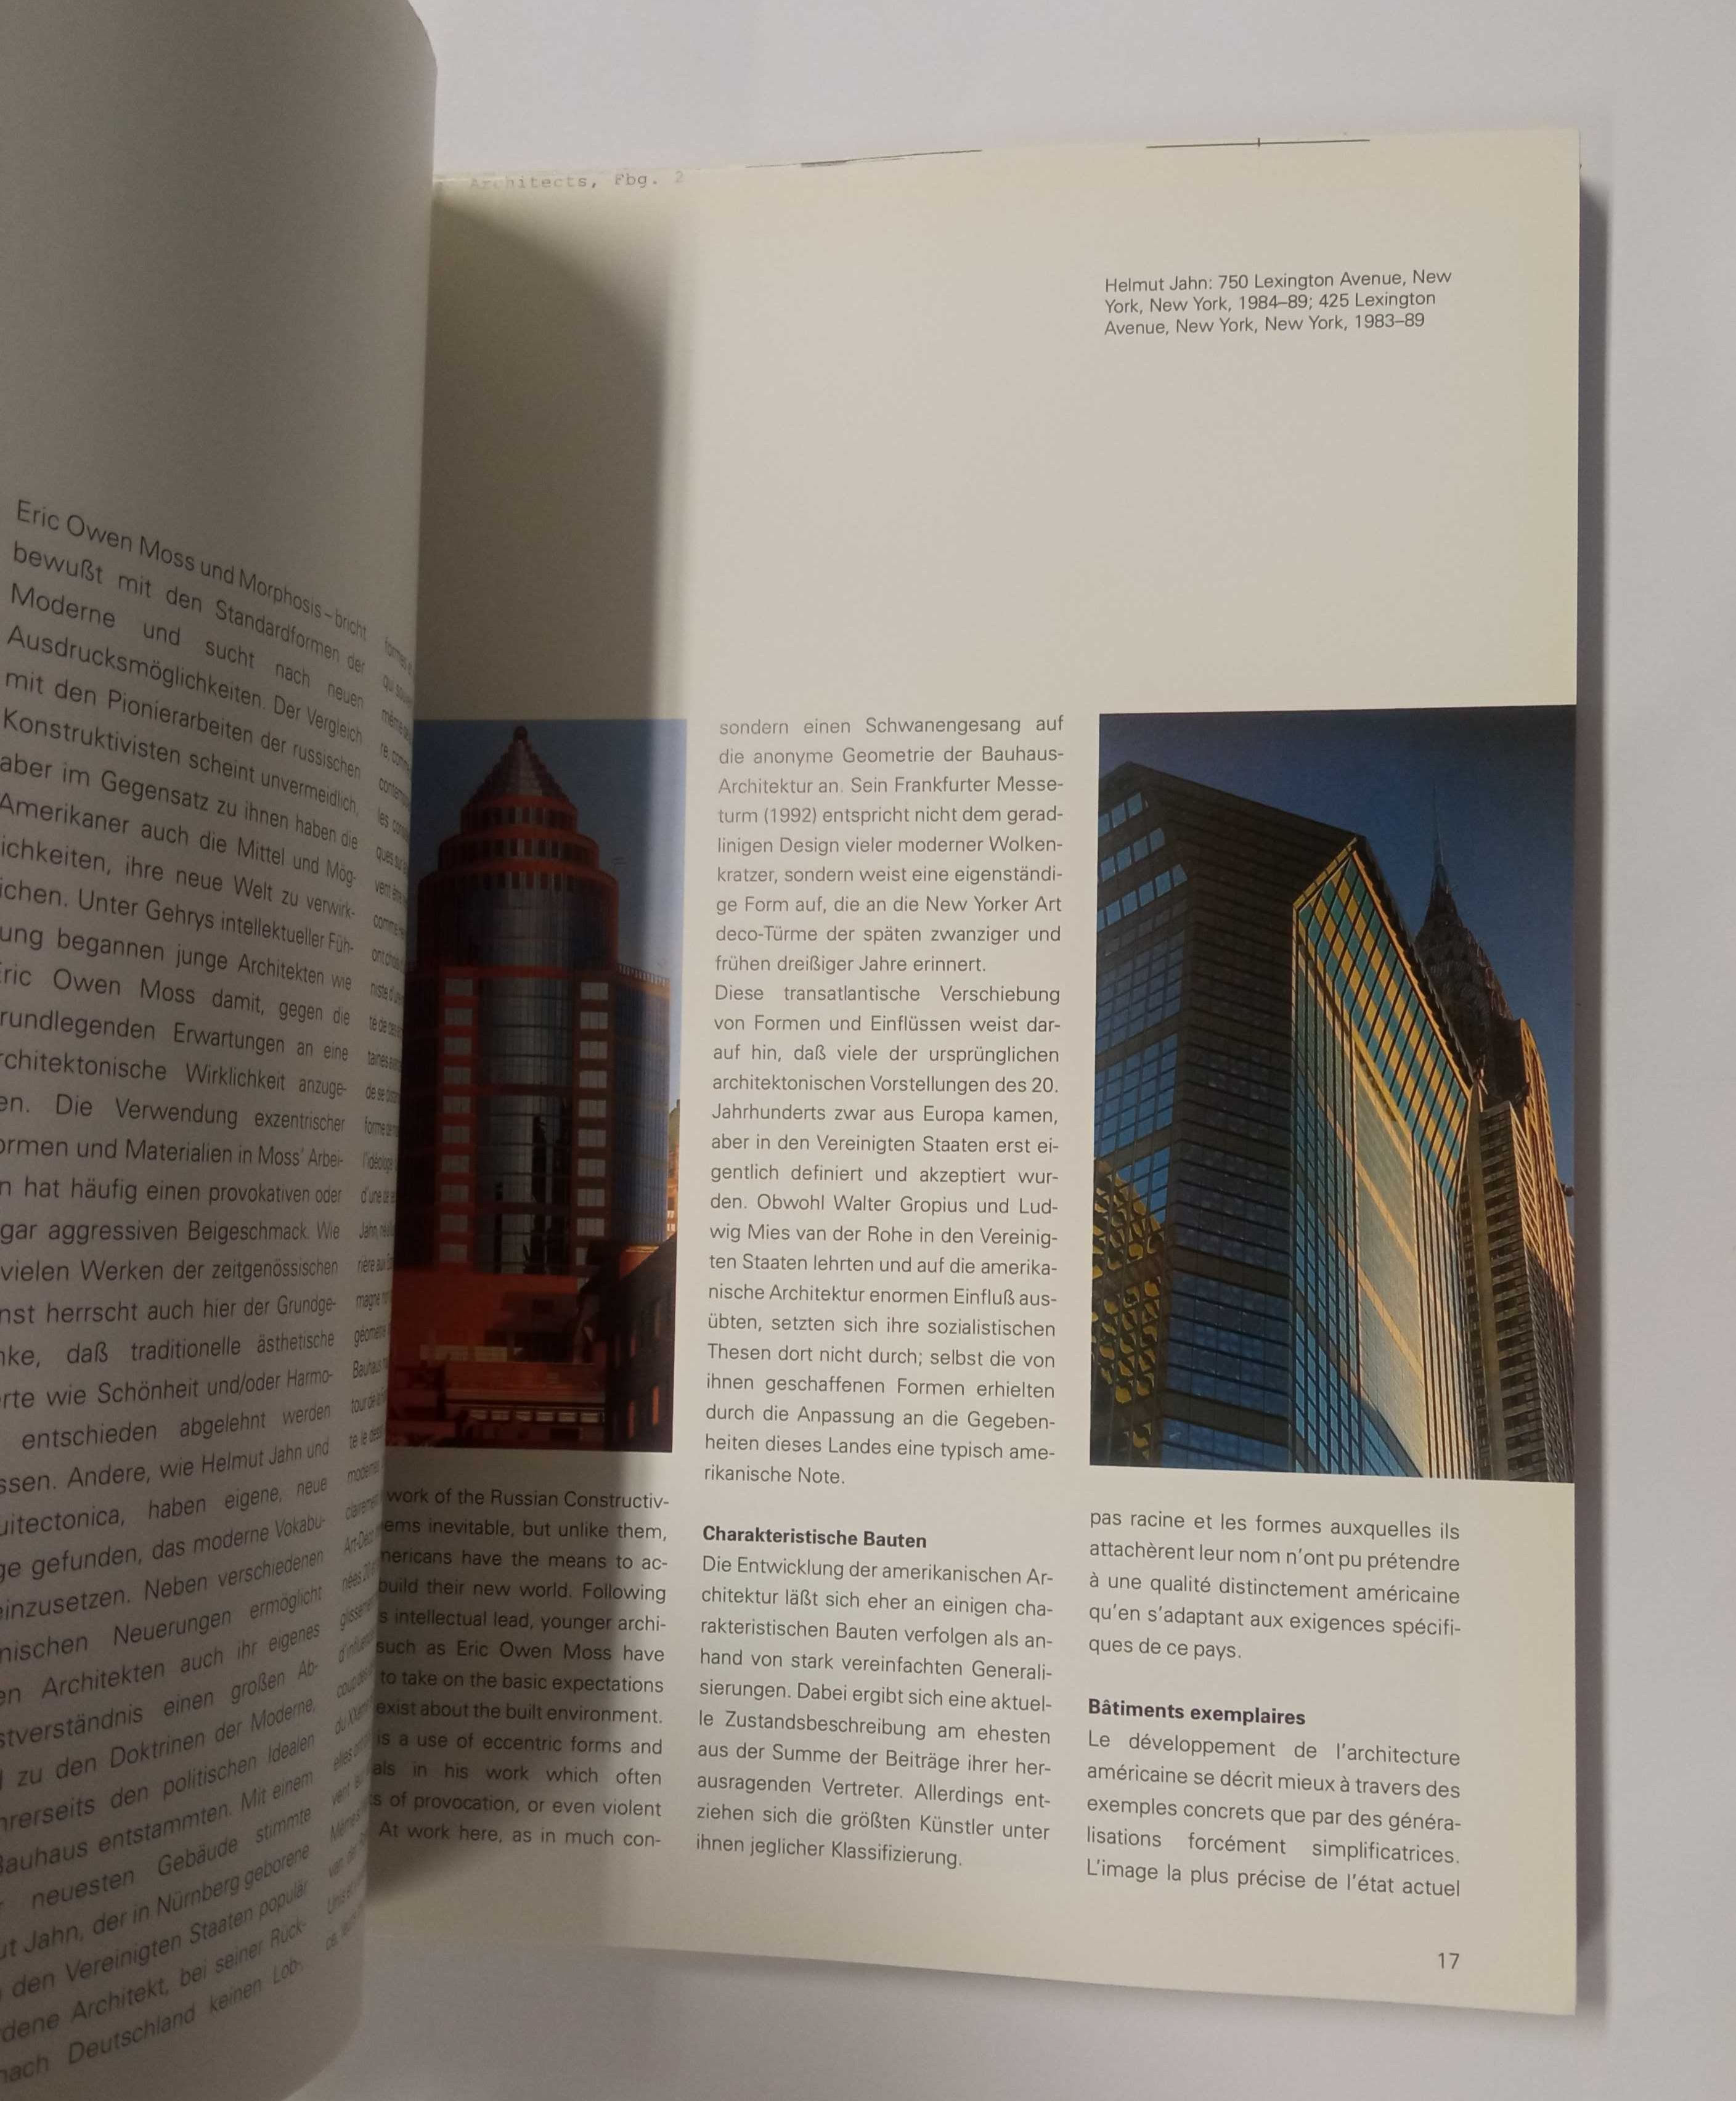 Contemporary American Architects, by Philip Jodidio